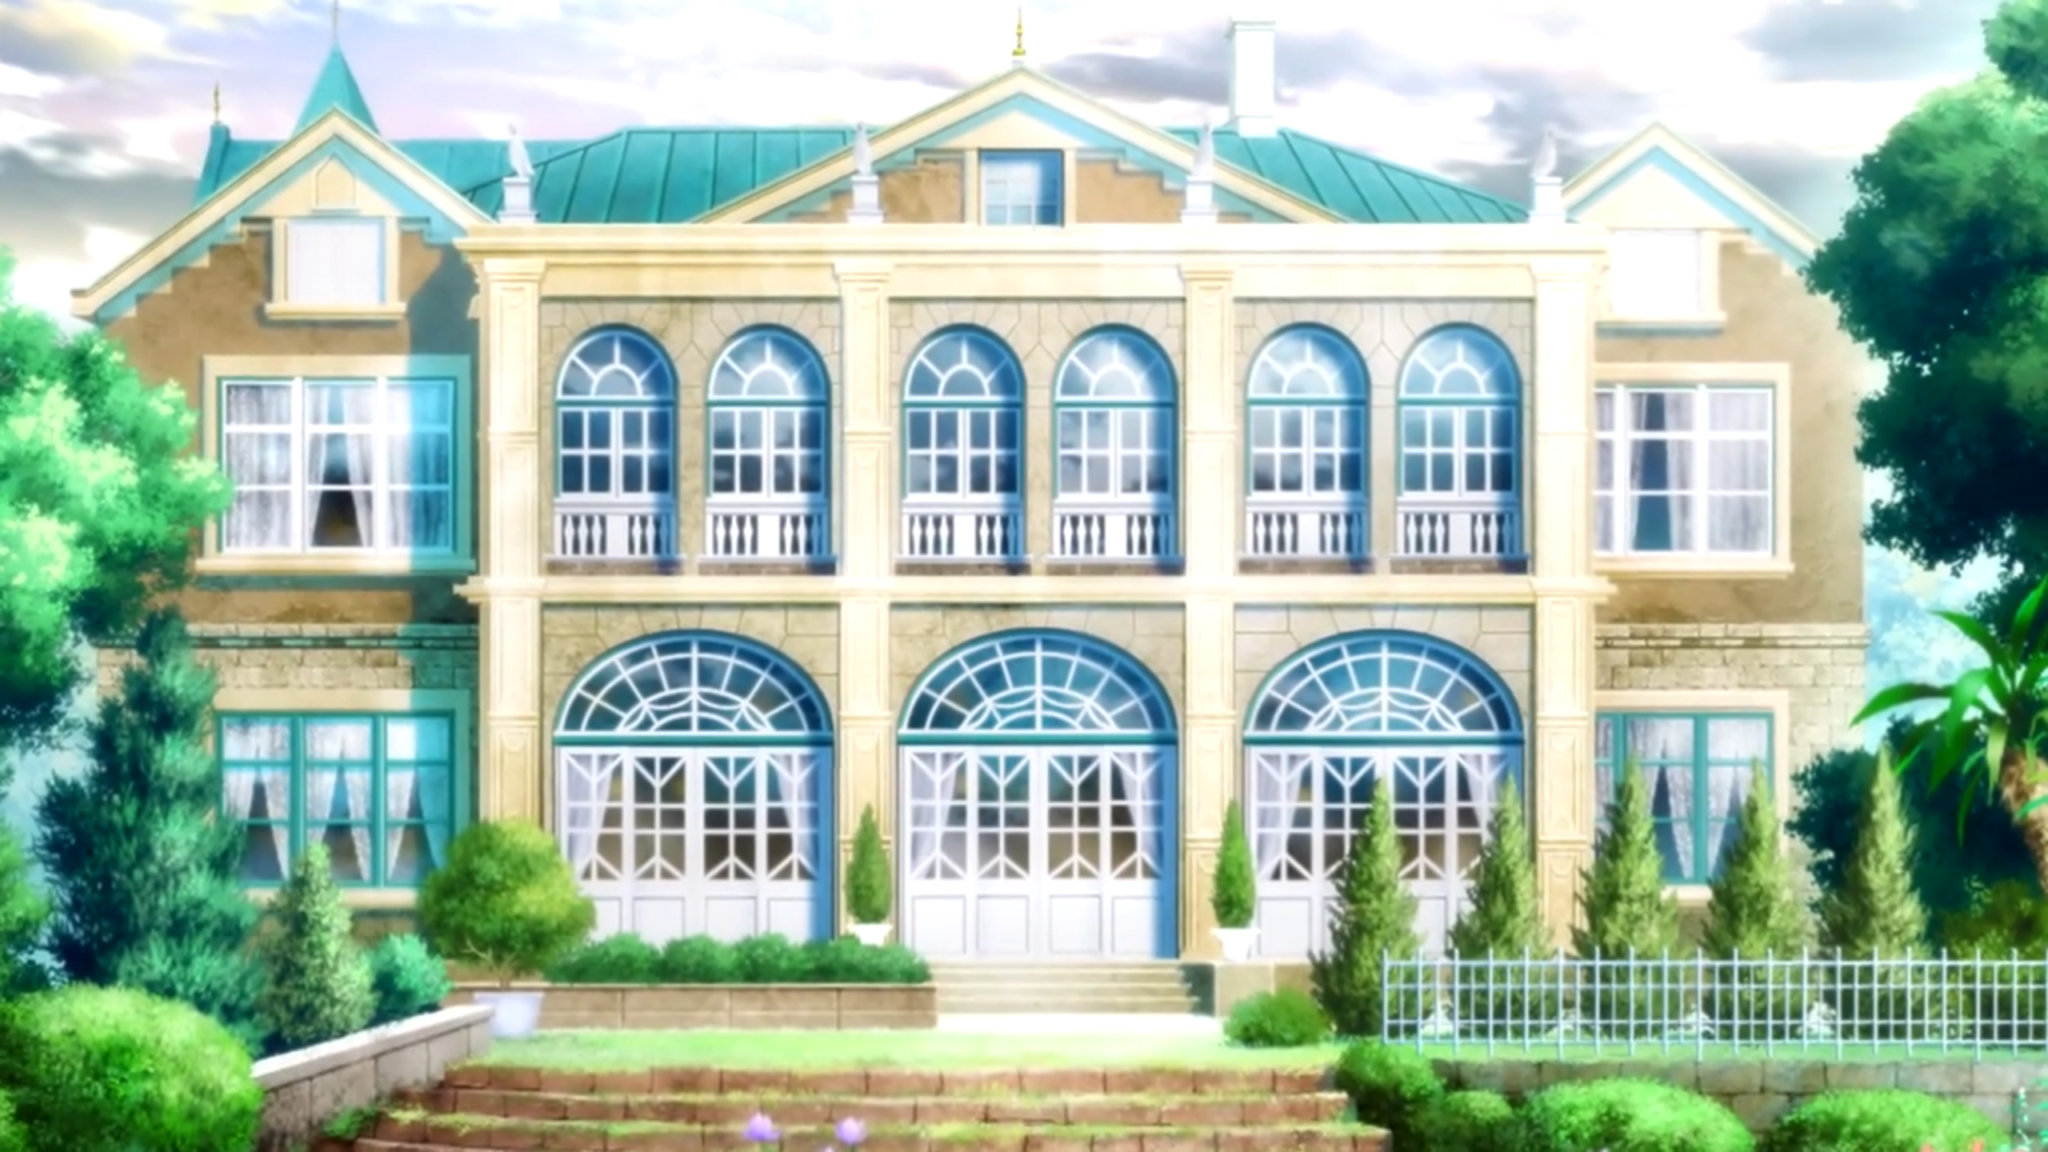 Anime Shonen Maid HD Wallpaper | Background Image